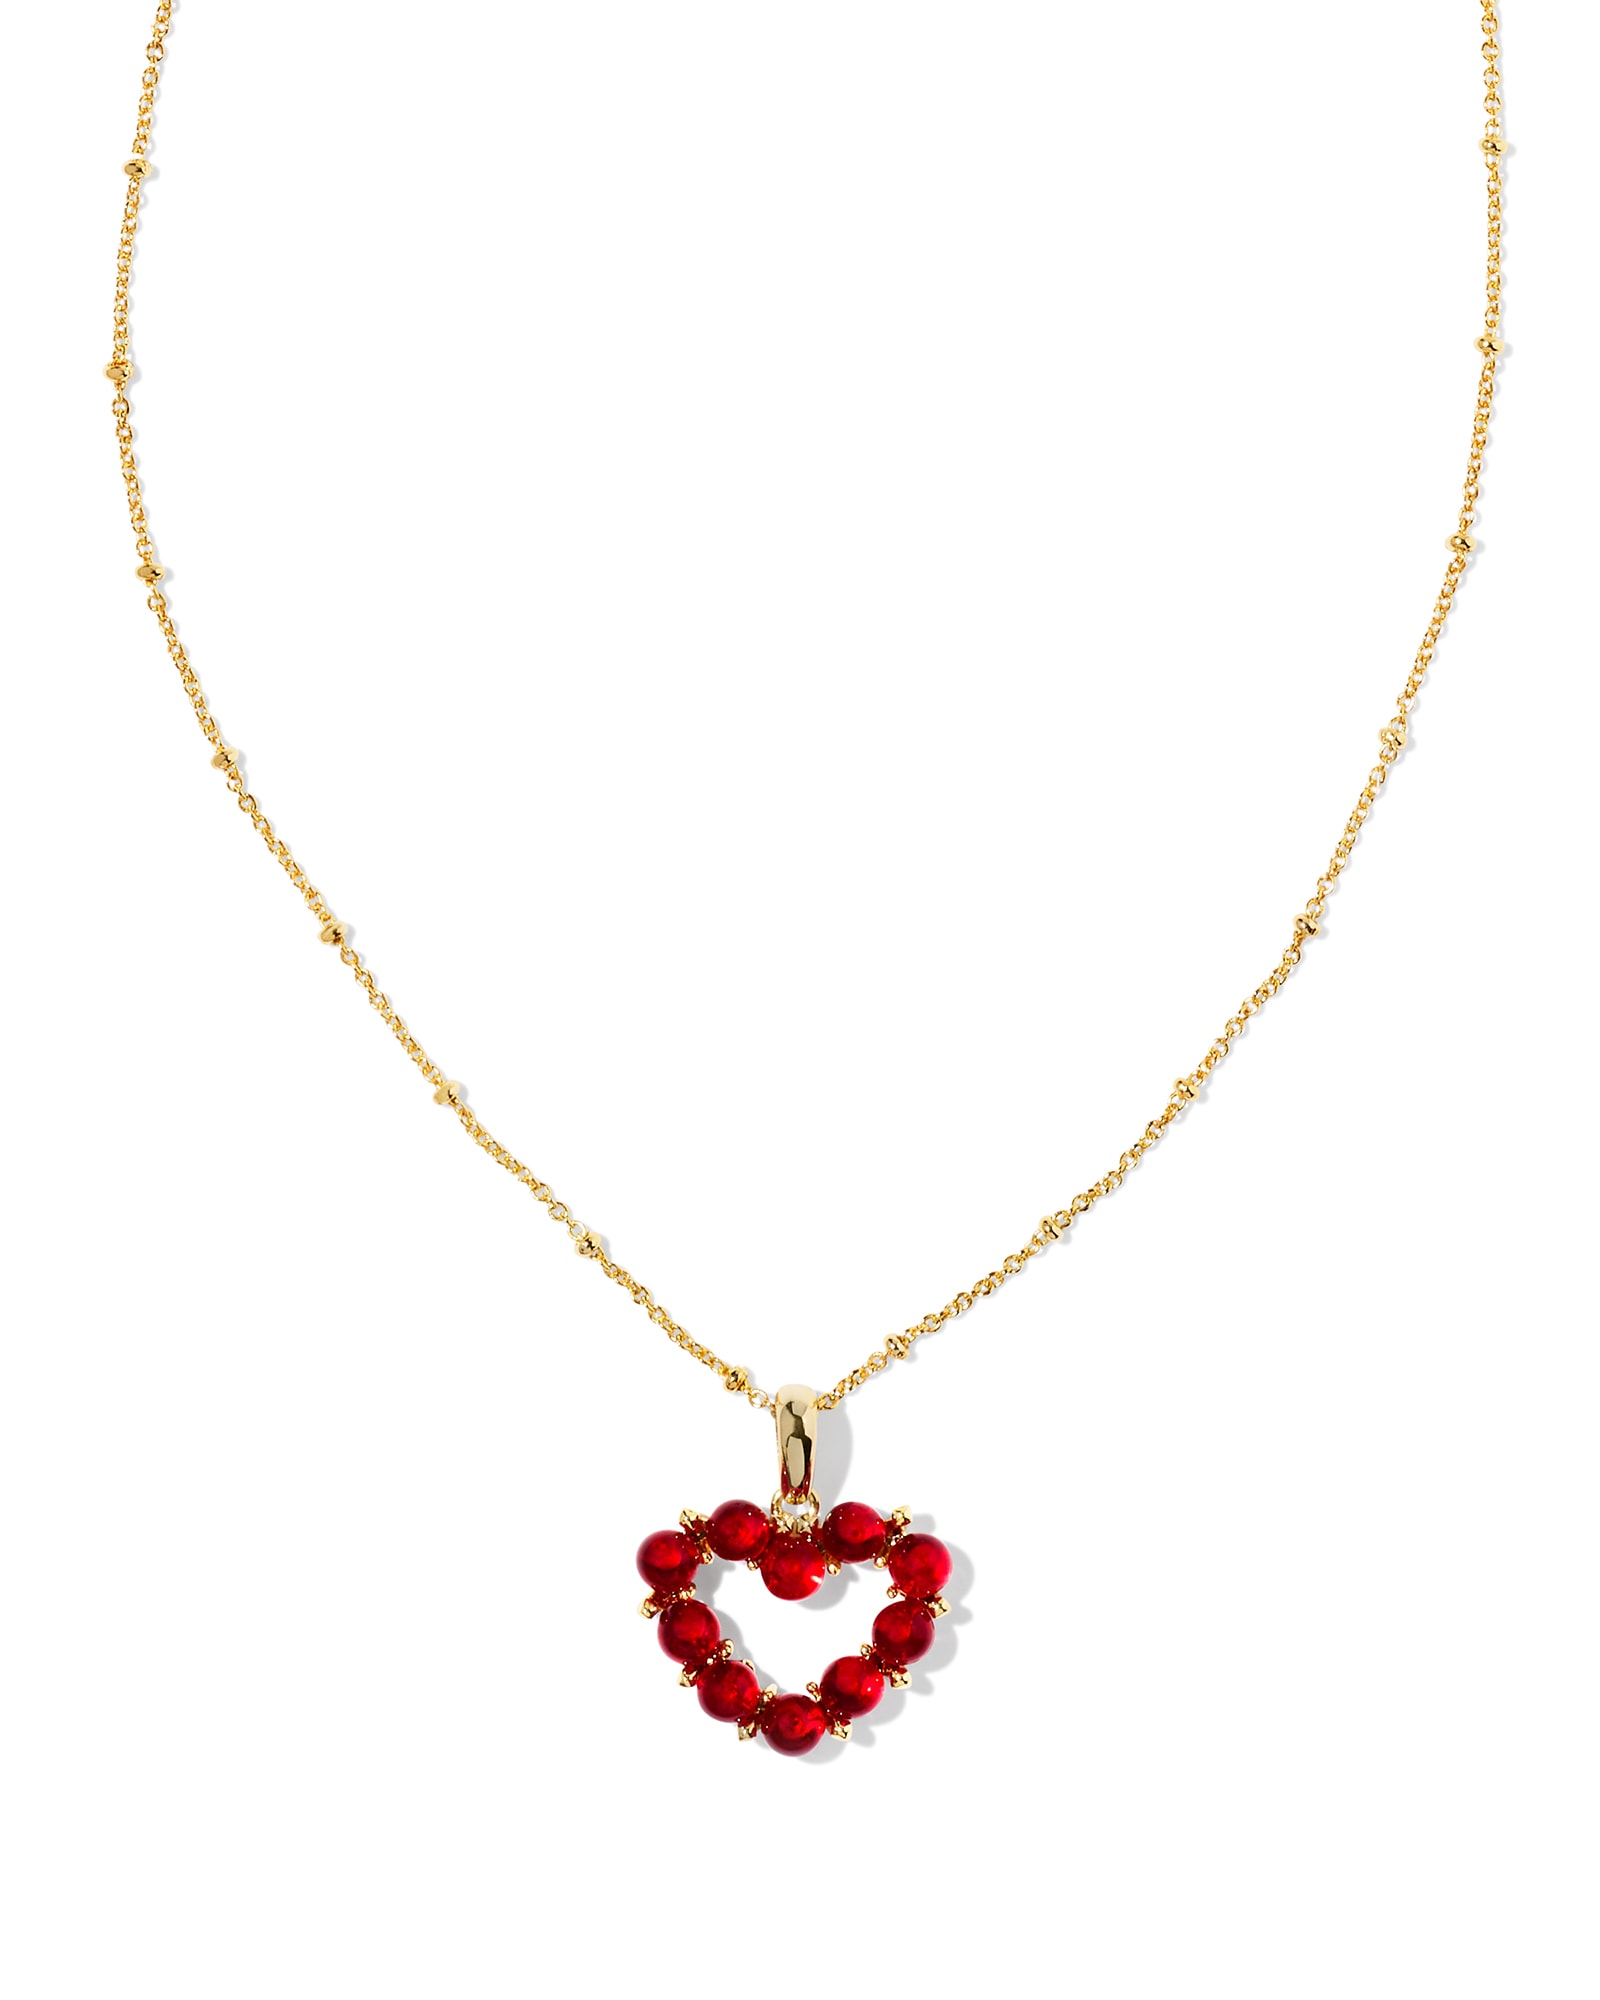 Ashton Gold Heart Short Pendant Necklace in Red Glass | Kendra Scott